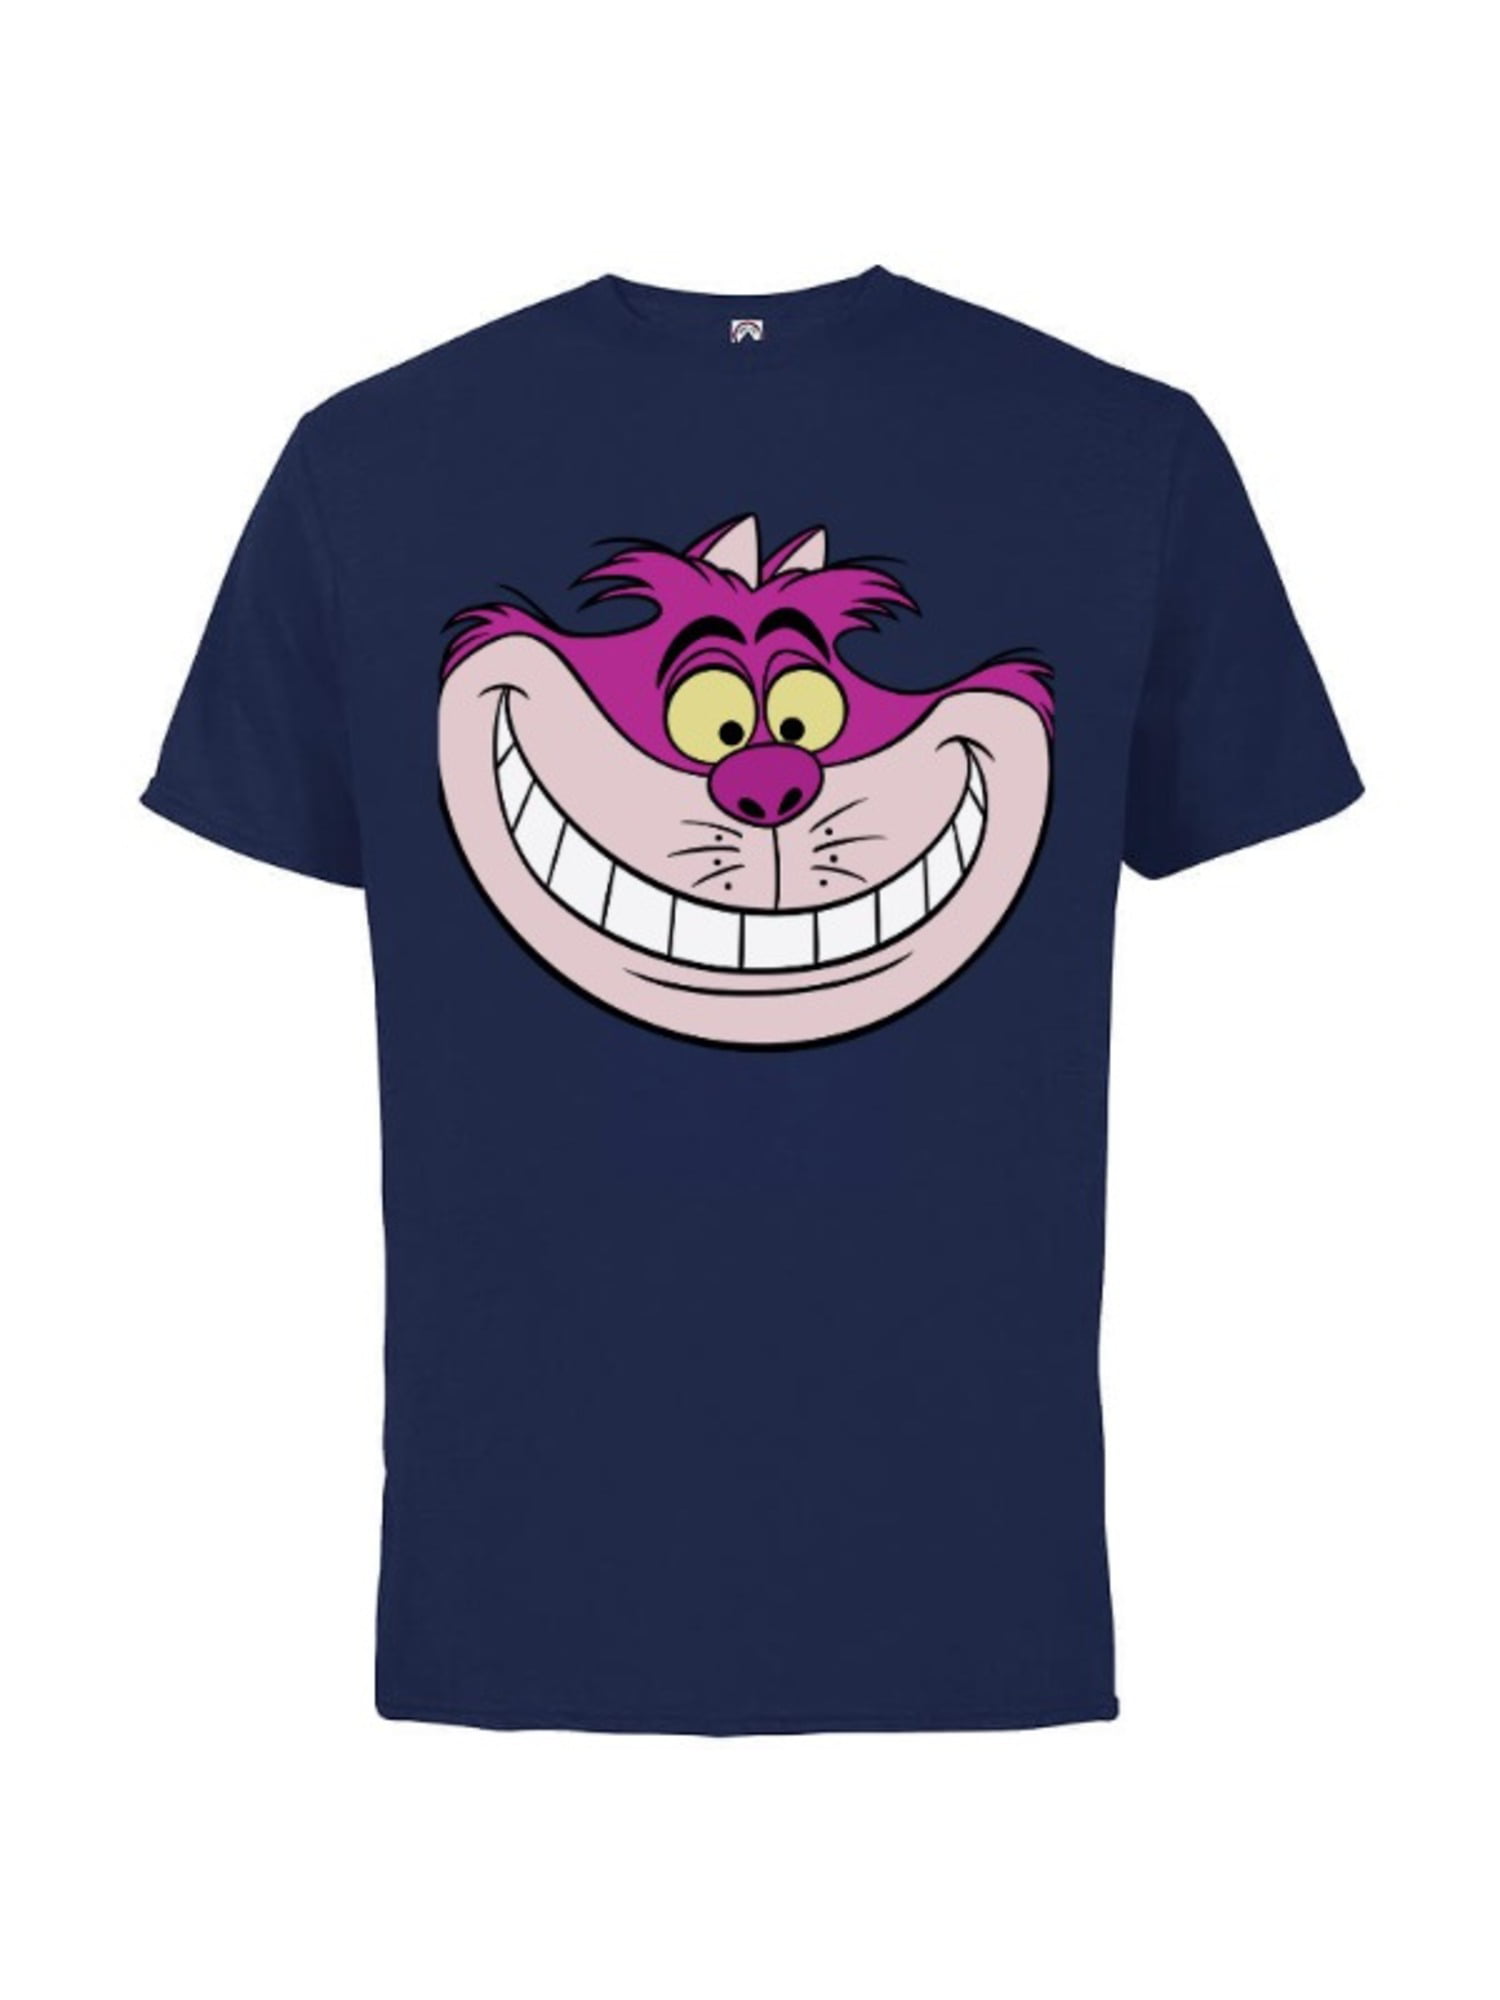 Classic Disney Cheshire Cat Smile Alice Wonderland Unisex Kids Tee Youth T-Shirt 